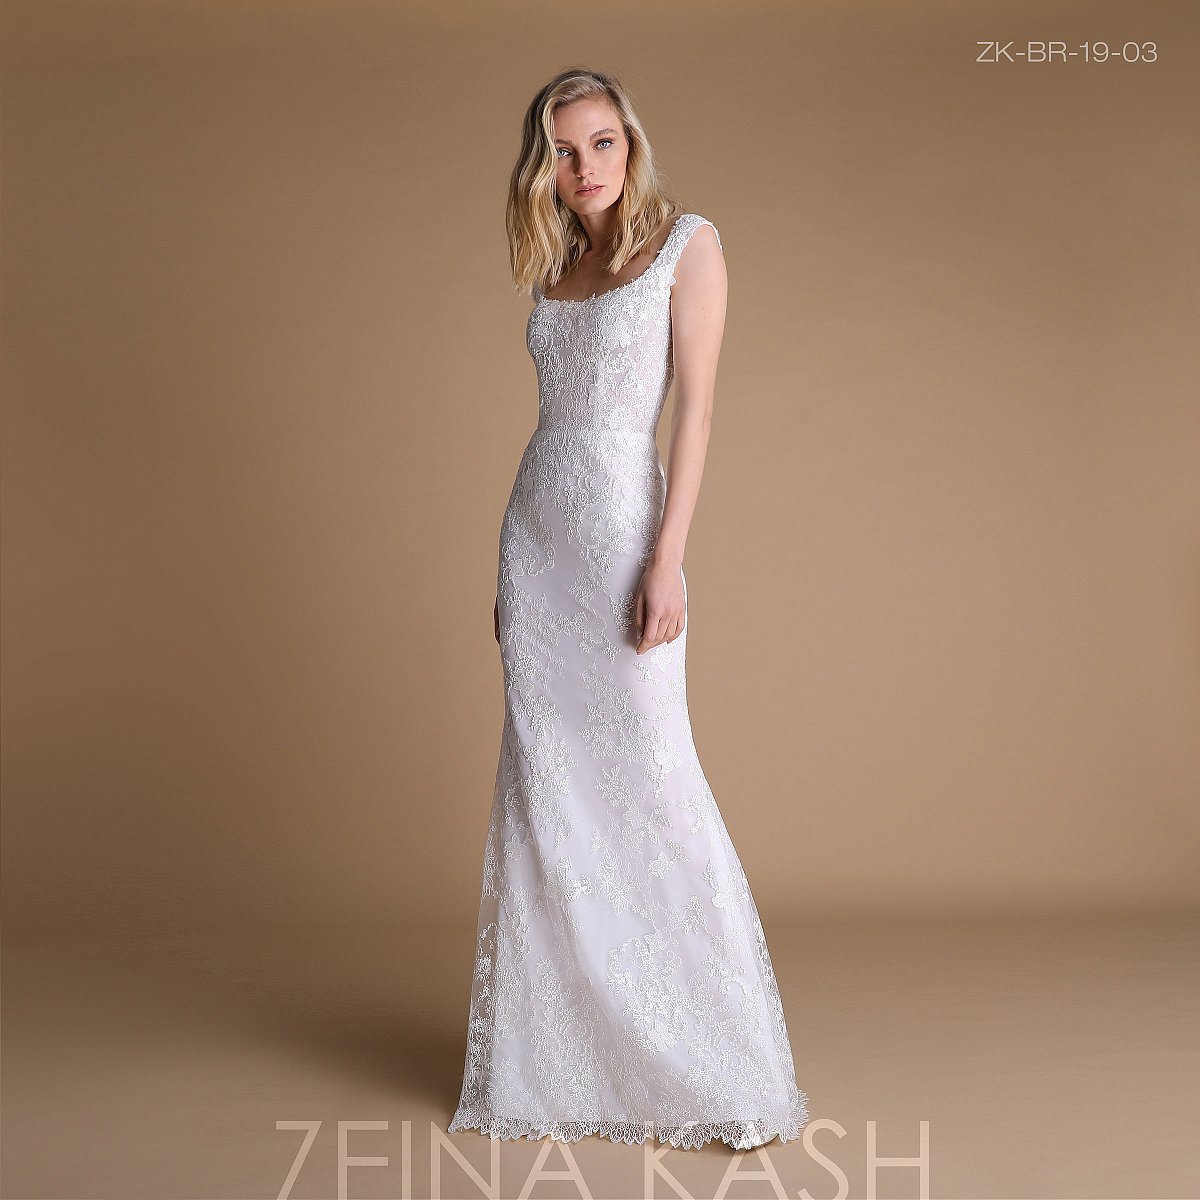 Zeina Kash 2019 collection - Bridal - 1